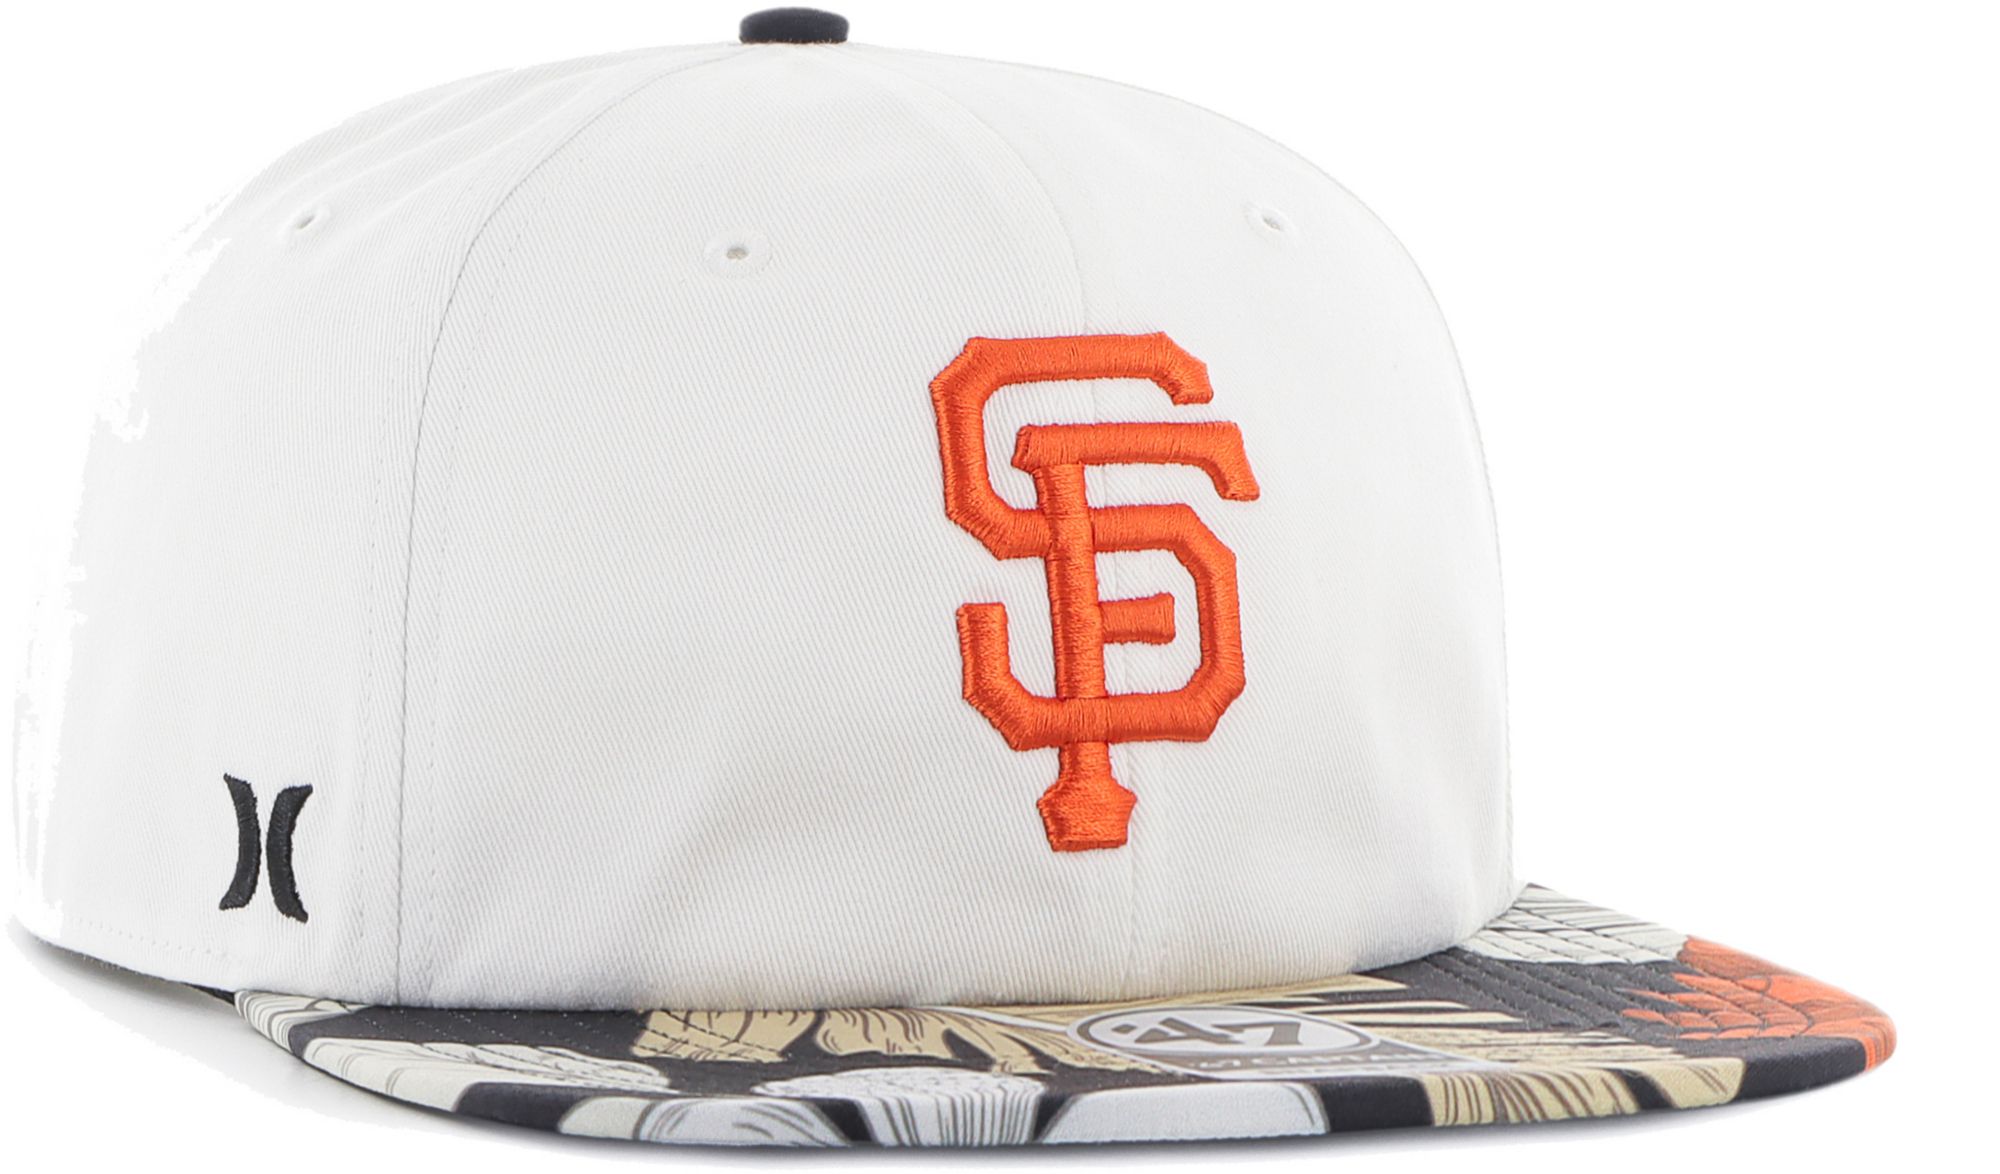 San Francisco Giants Hats in San Francisco Giants Team Shop 